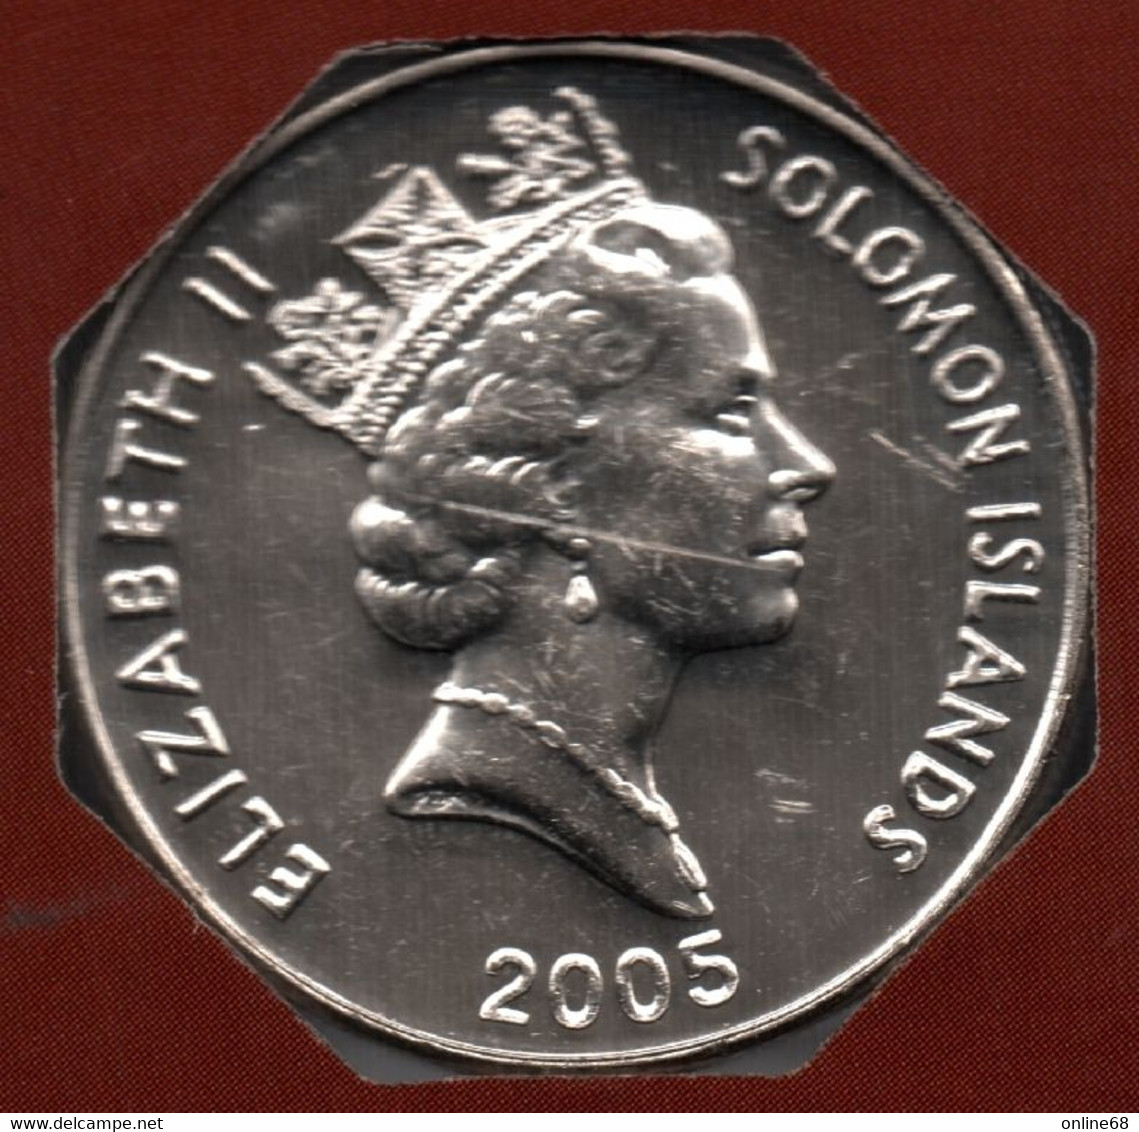 SOLOMON ISLANDS 20 CENTS 2005  	KM# 28 Elizabeth II - Salomonen